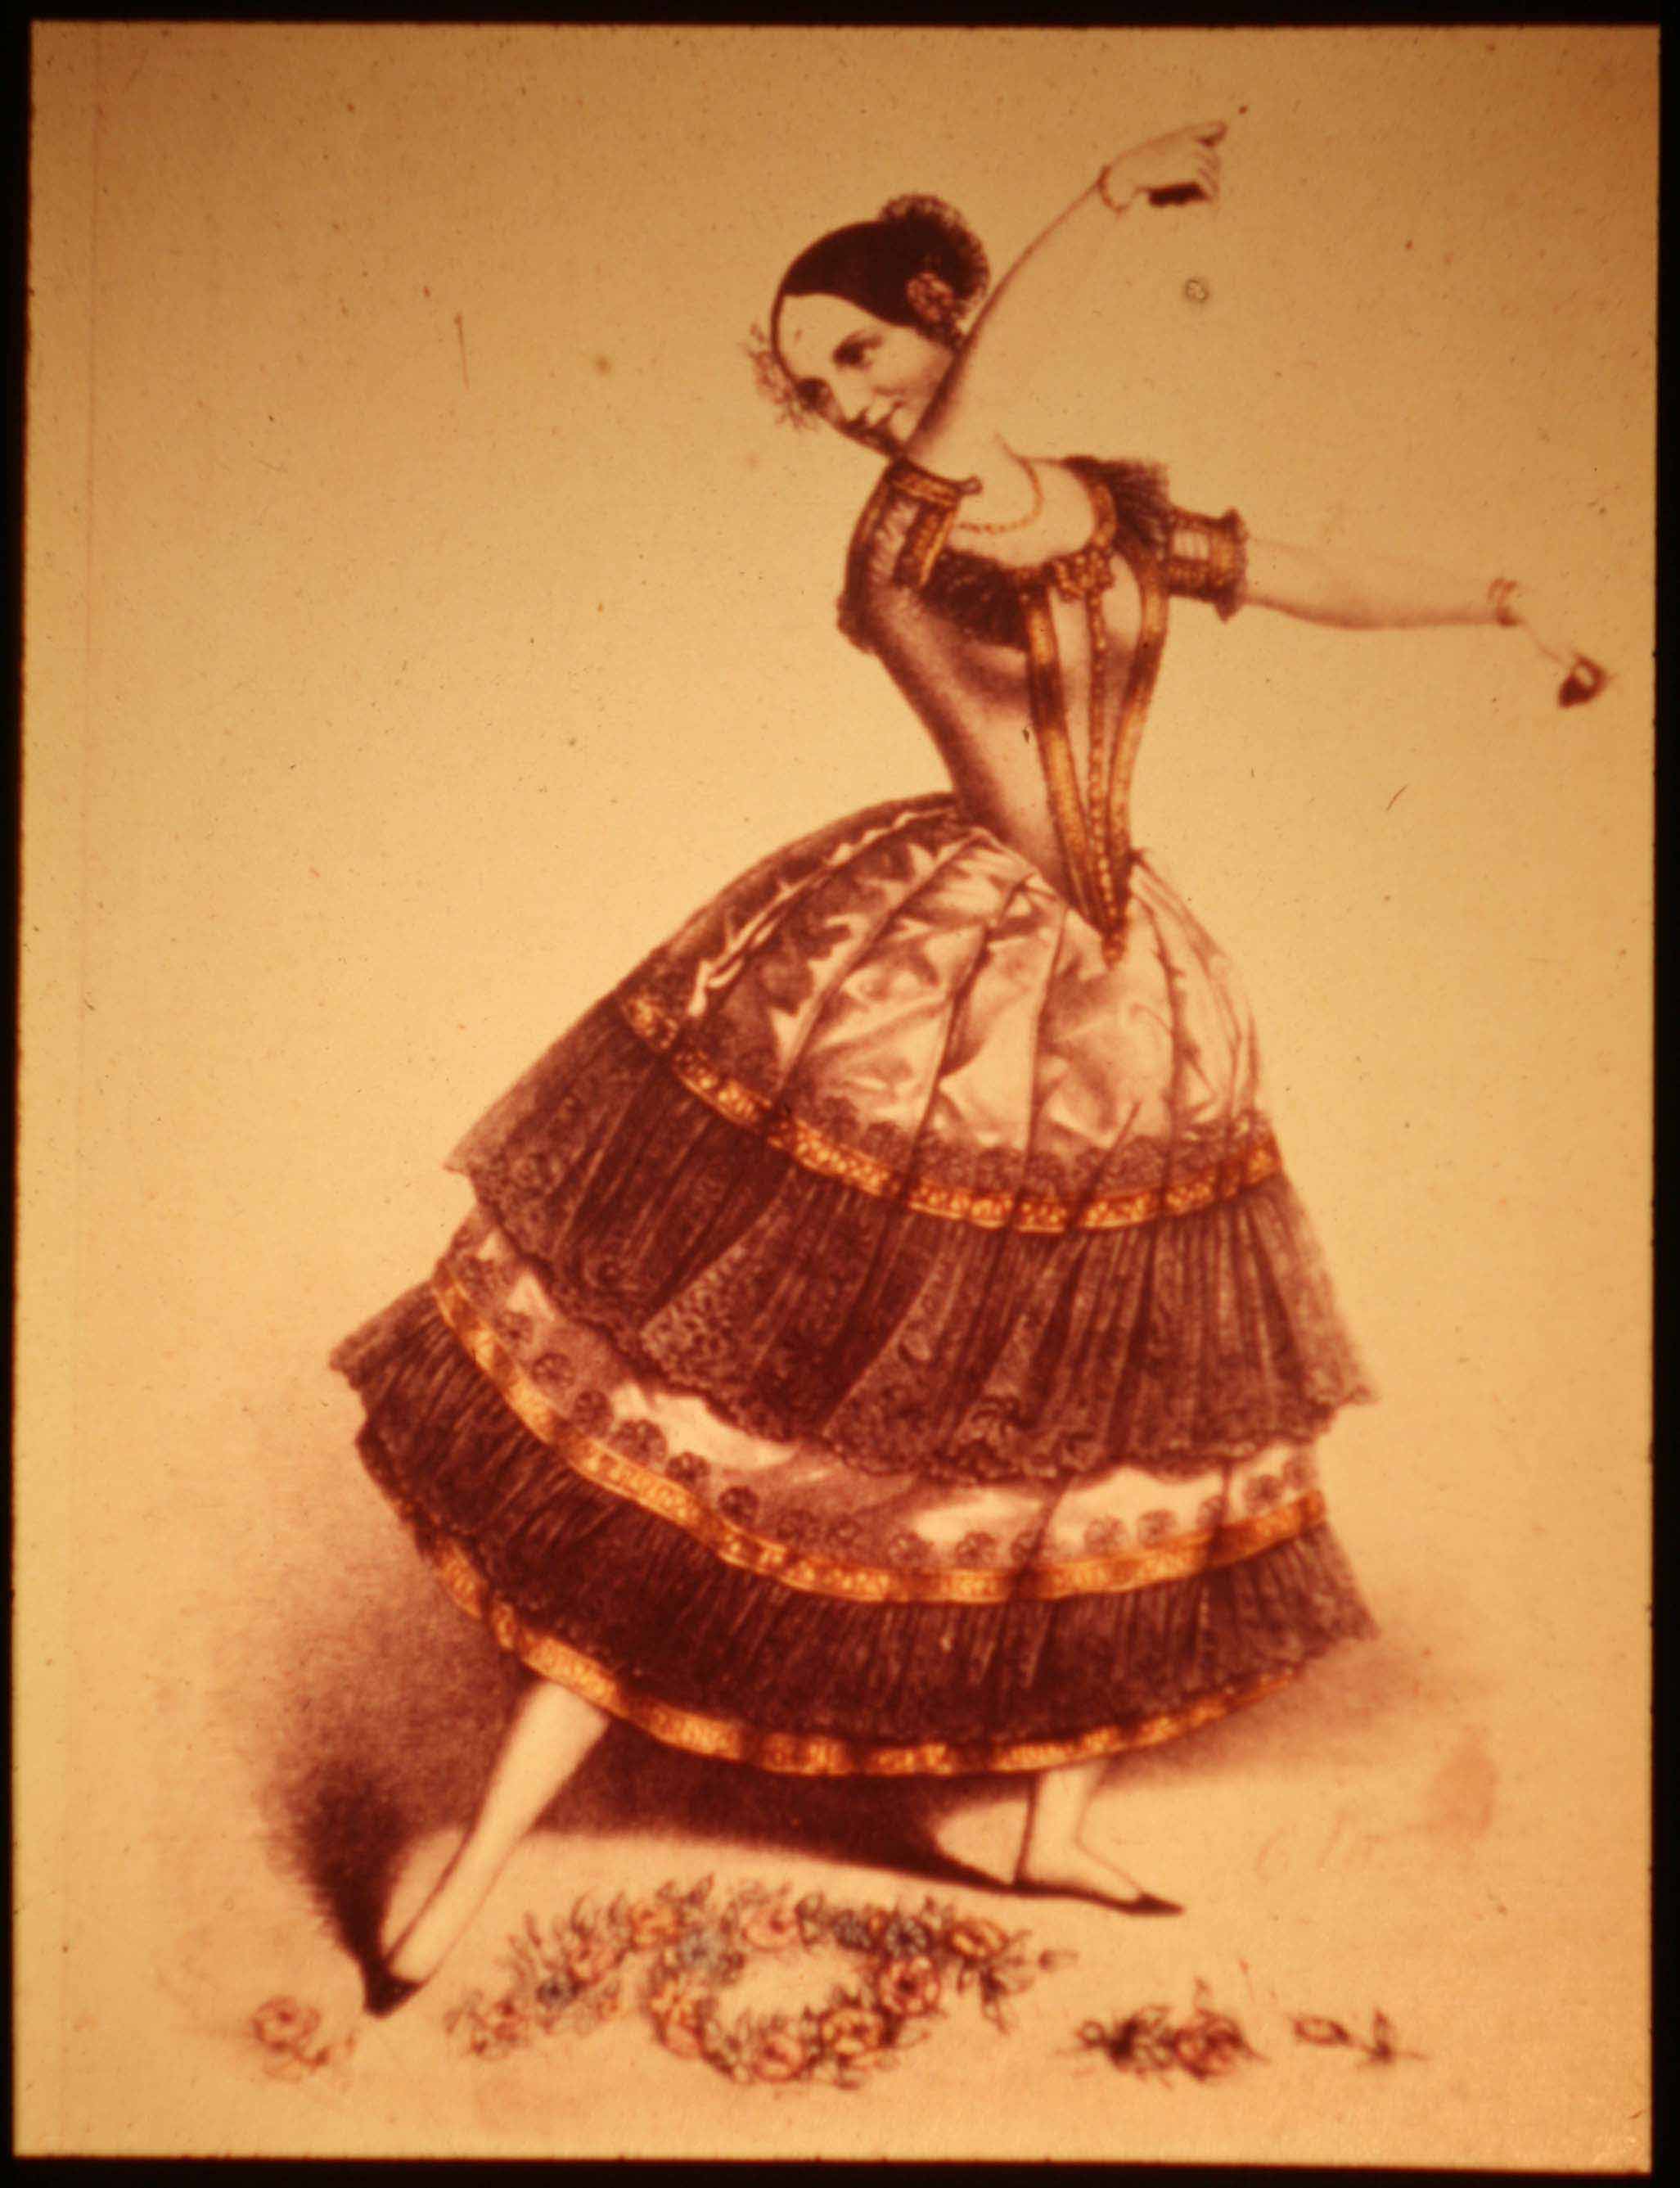 12- Fanny Elssler dances the Cachuca